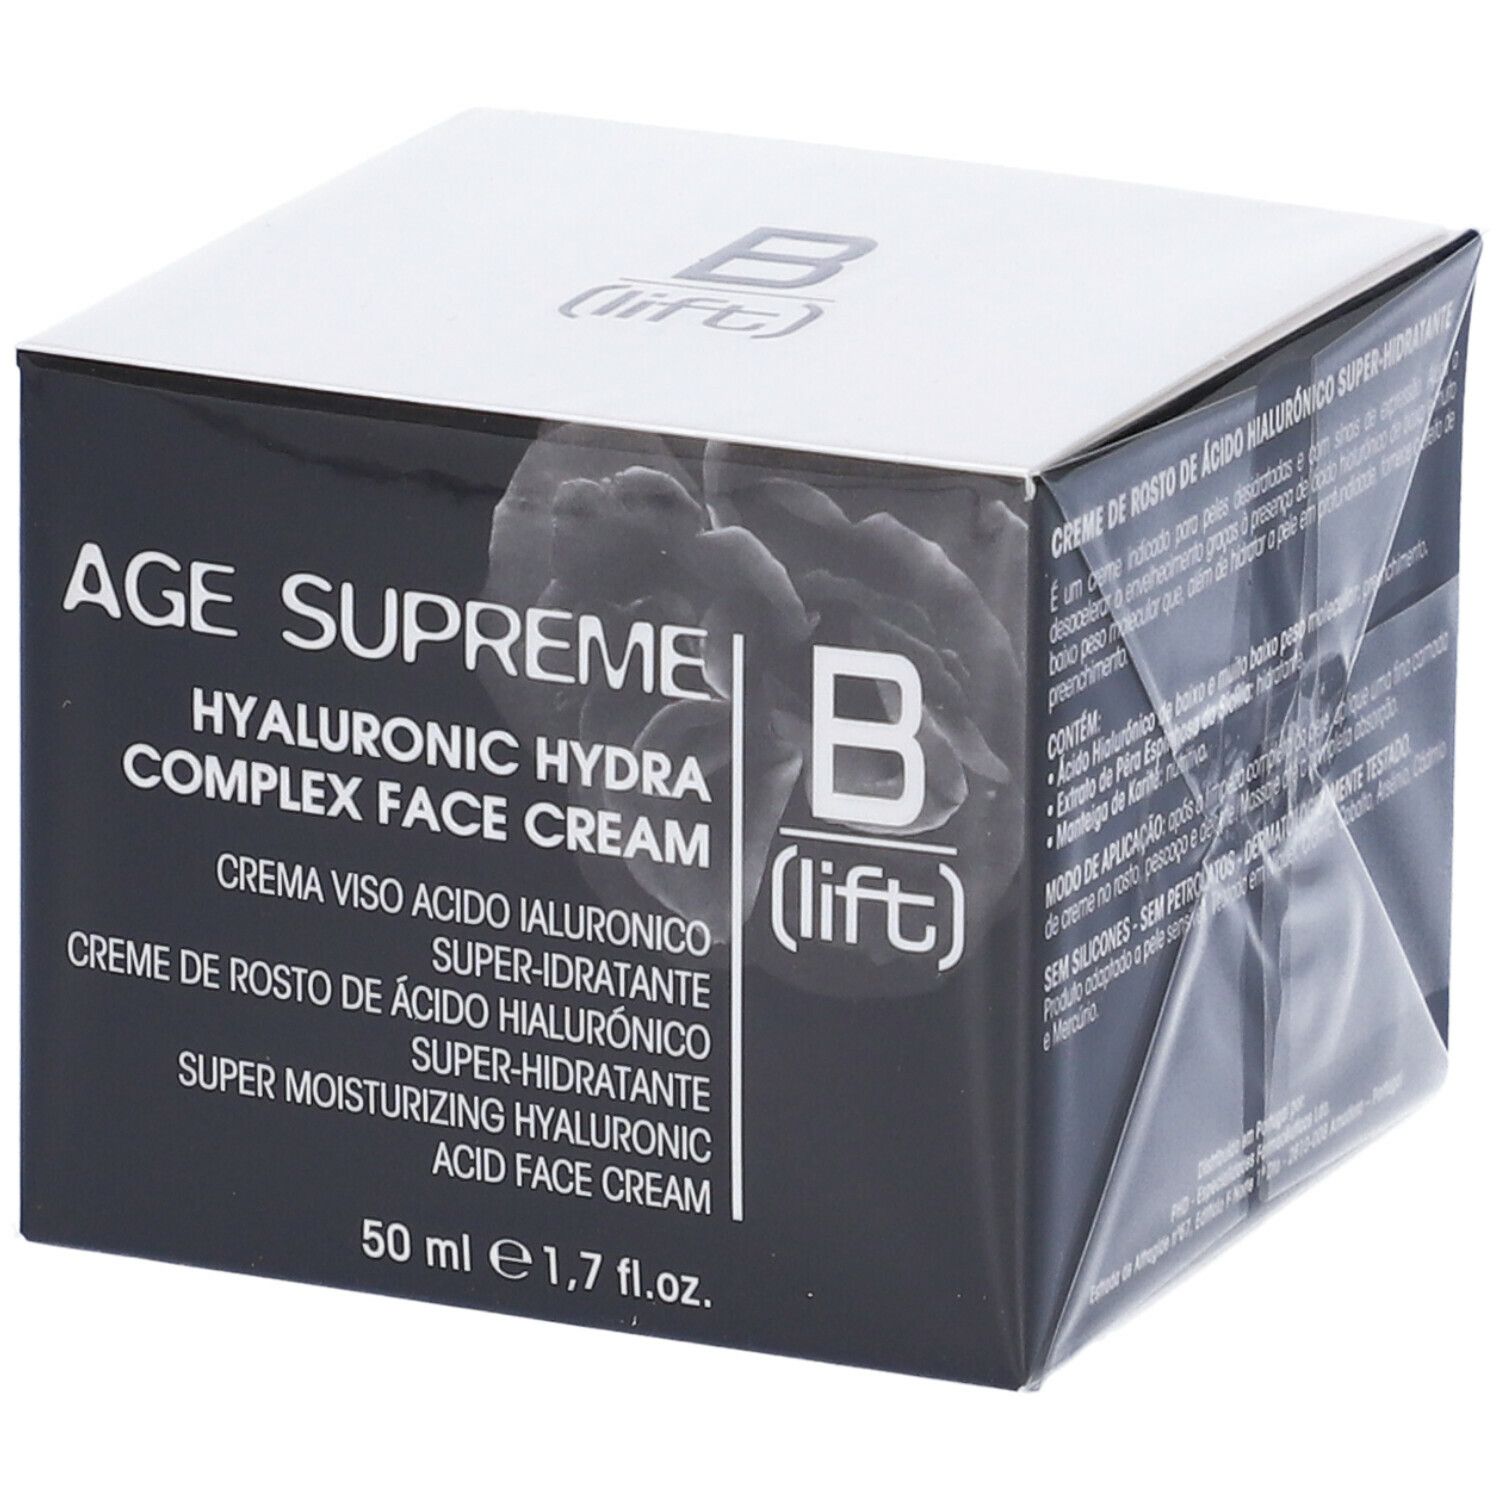 Galenic B (lift) Age Supreme Hyaluronic Hydra Complex Face Cream